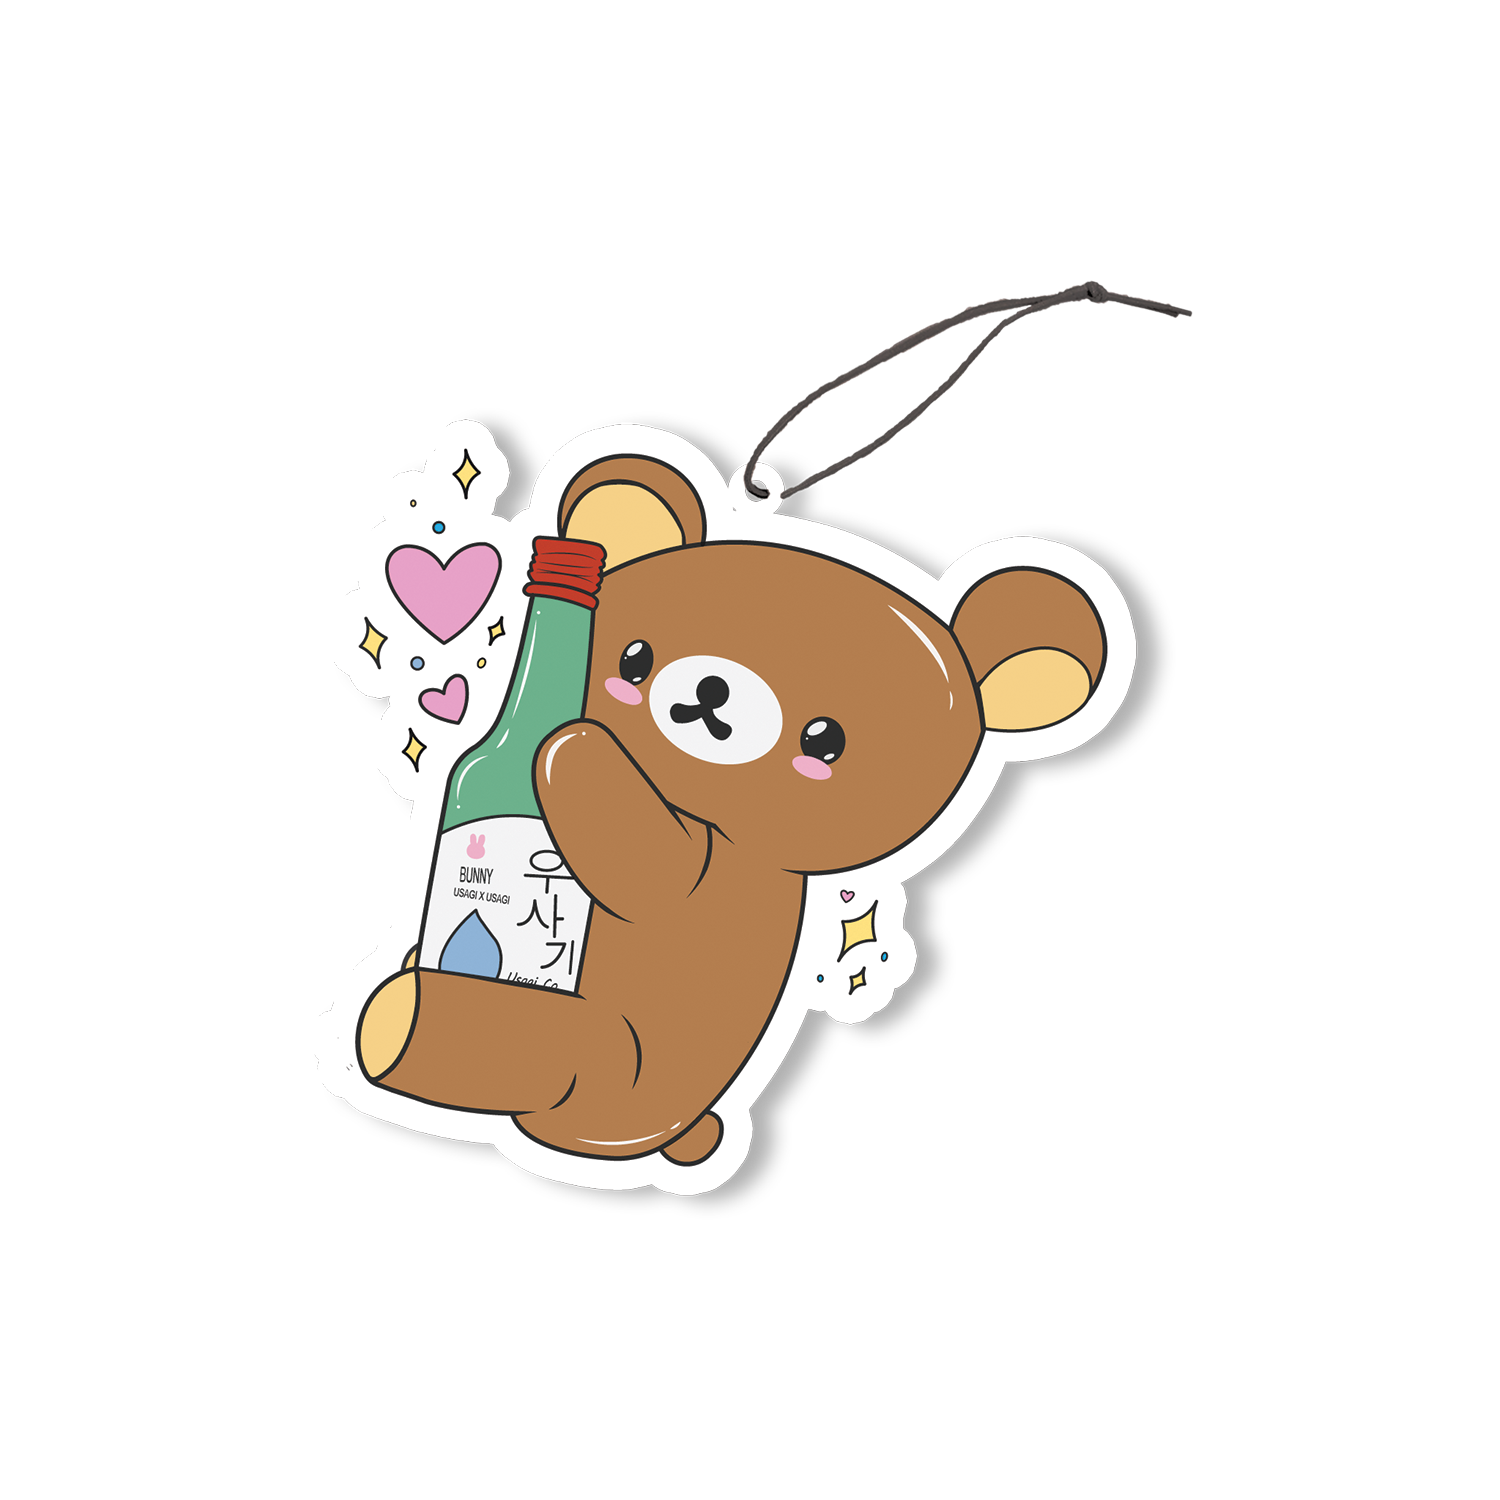 Soju Kuma Air Freshener design features brown bear holding a soju bottle.